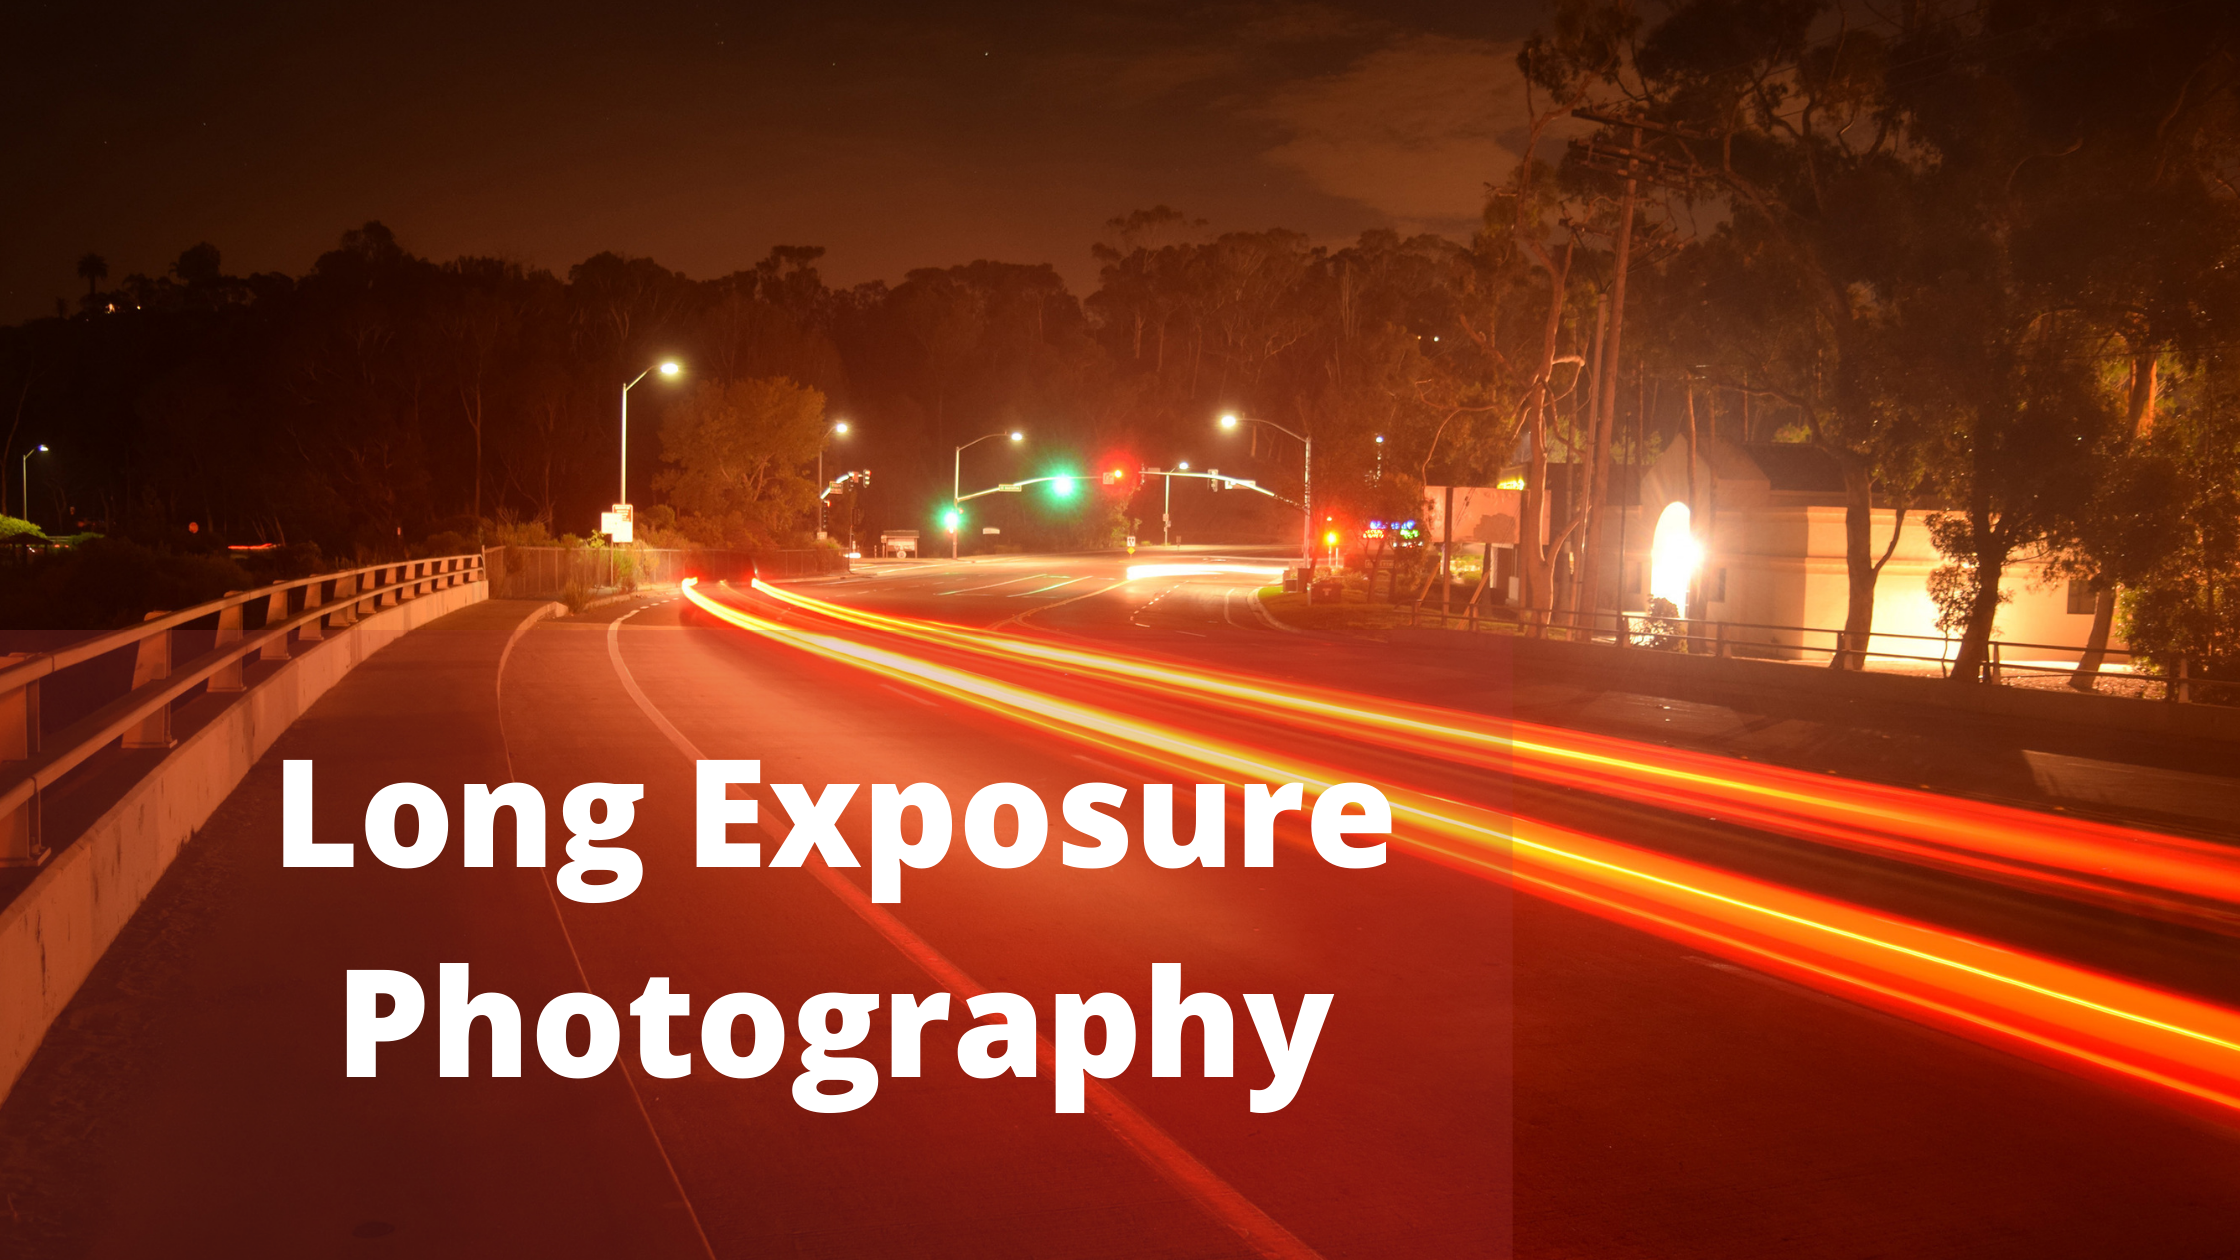 Capture Amazing Images Using Long Exposure Photography